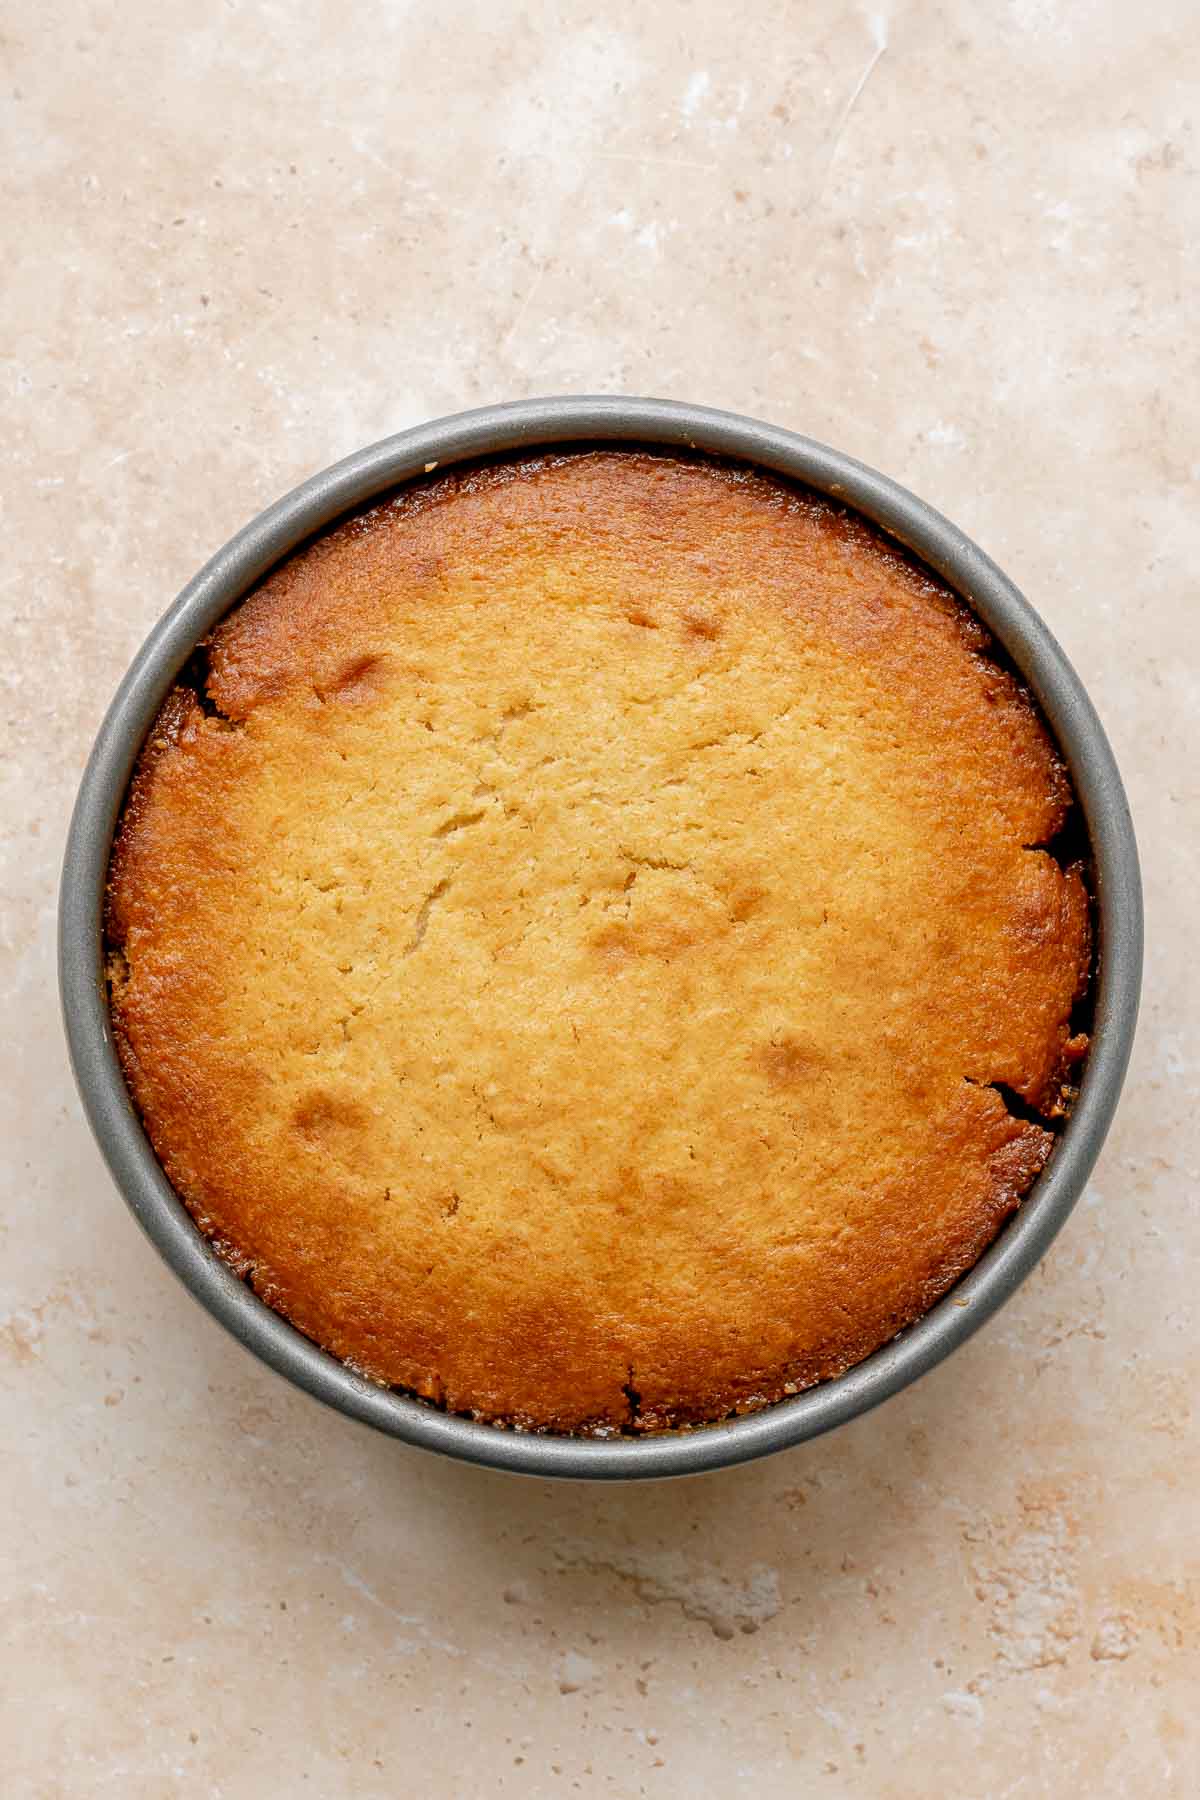 Baked pecan upside down cake in a pan.